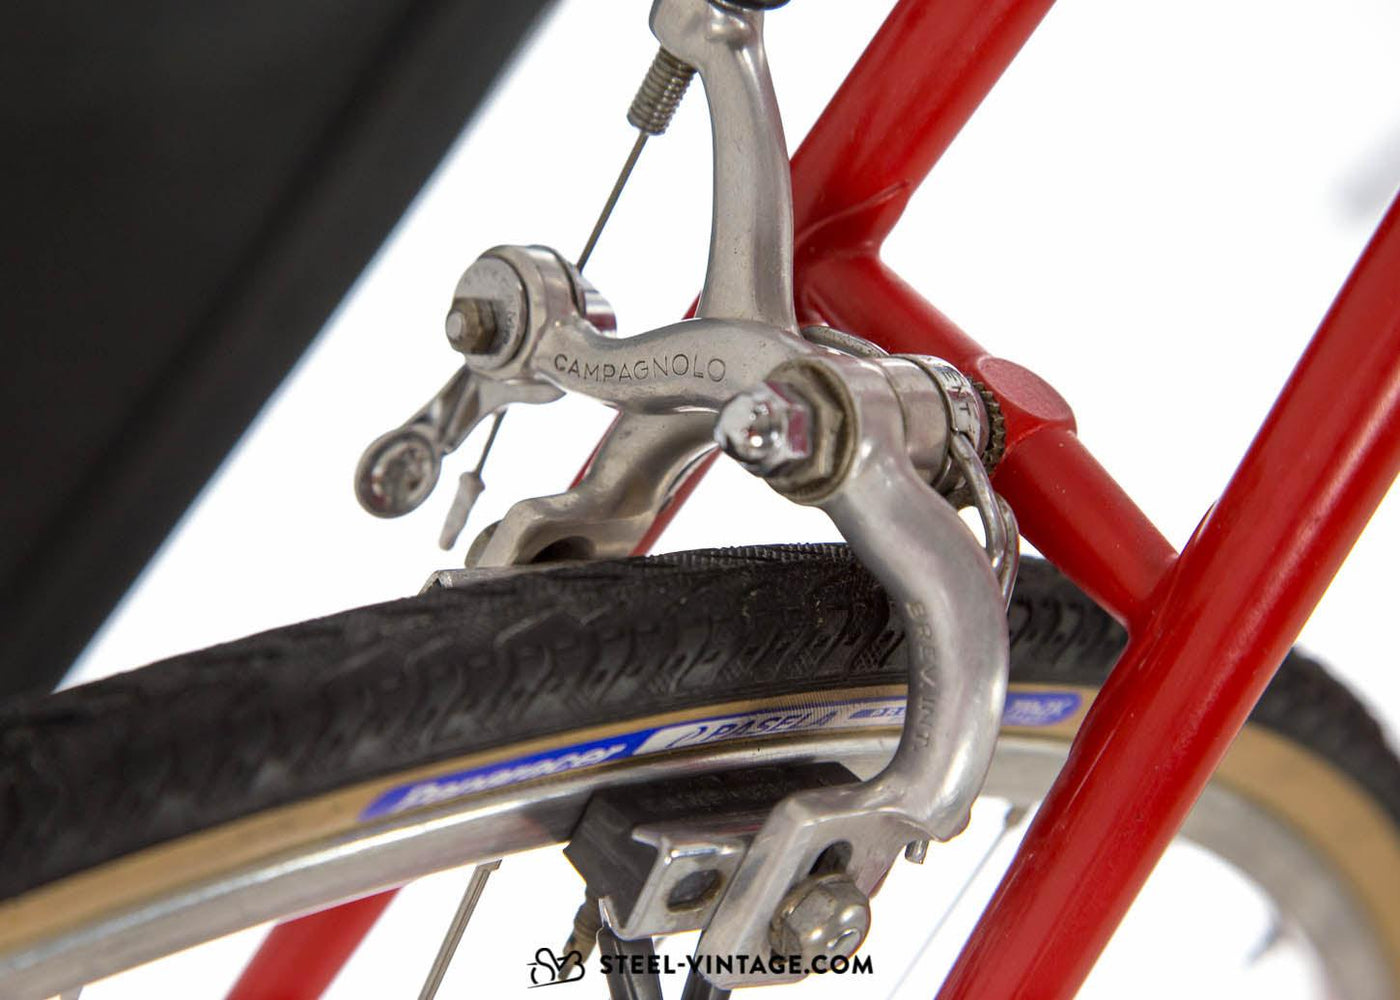 Eddy Merckx Professional Large Road Bike 1982 - Steel Vintage Bikes